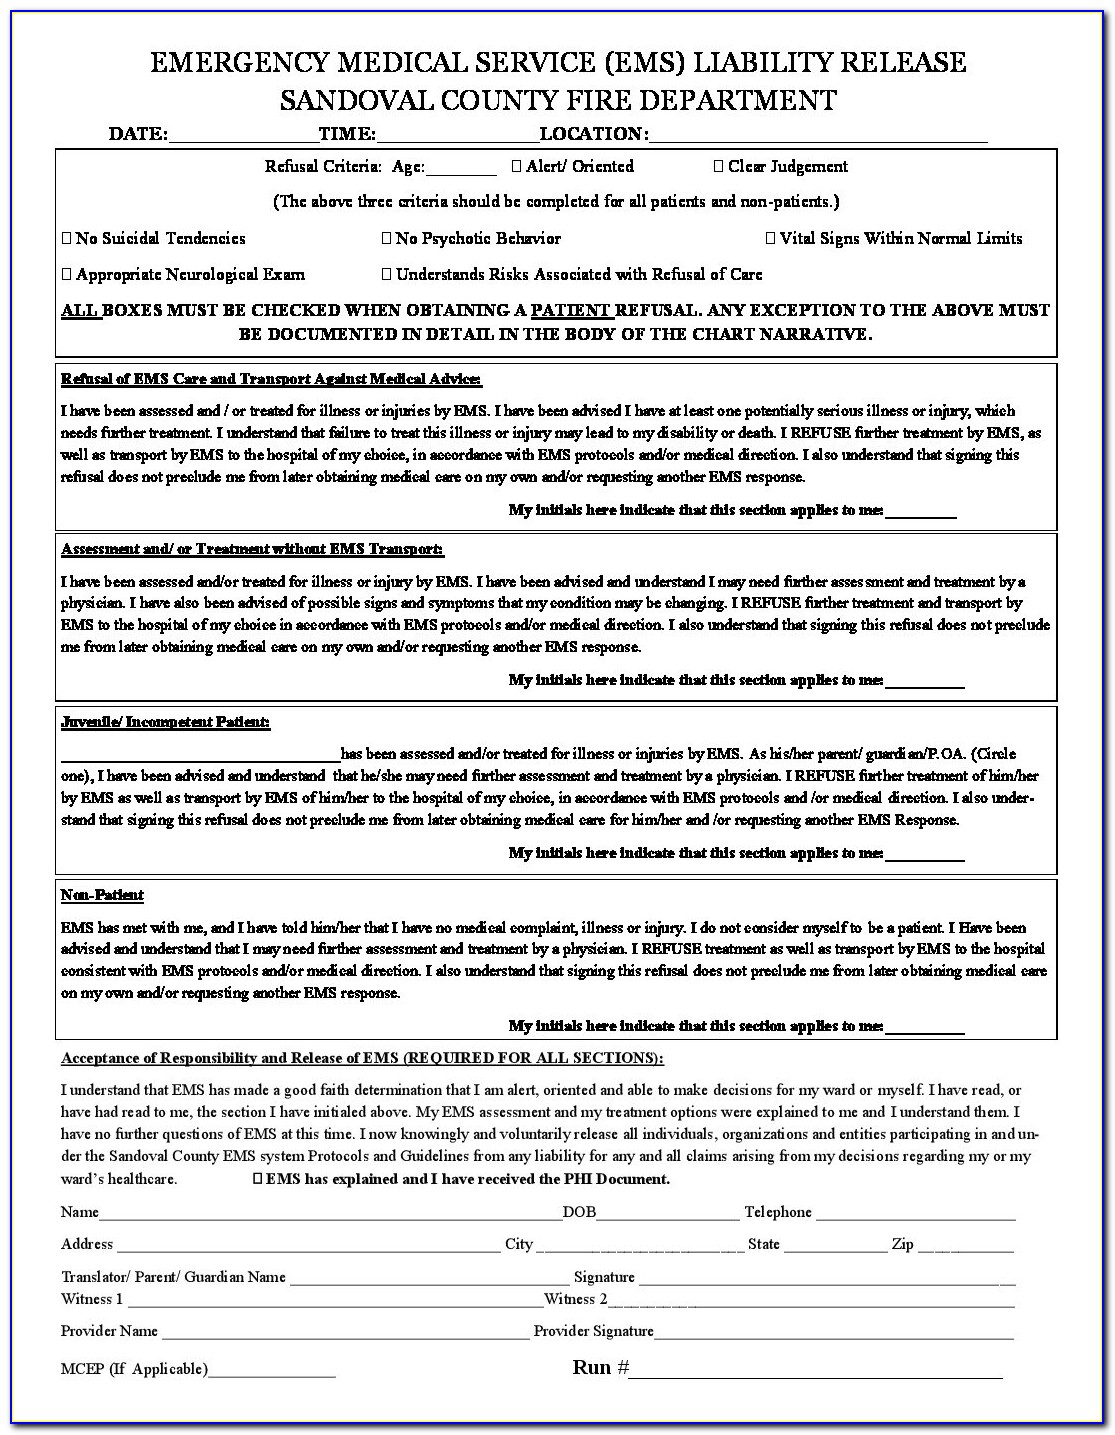 Tarrant County Marriage License Public Record